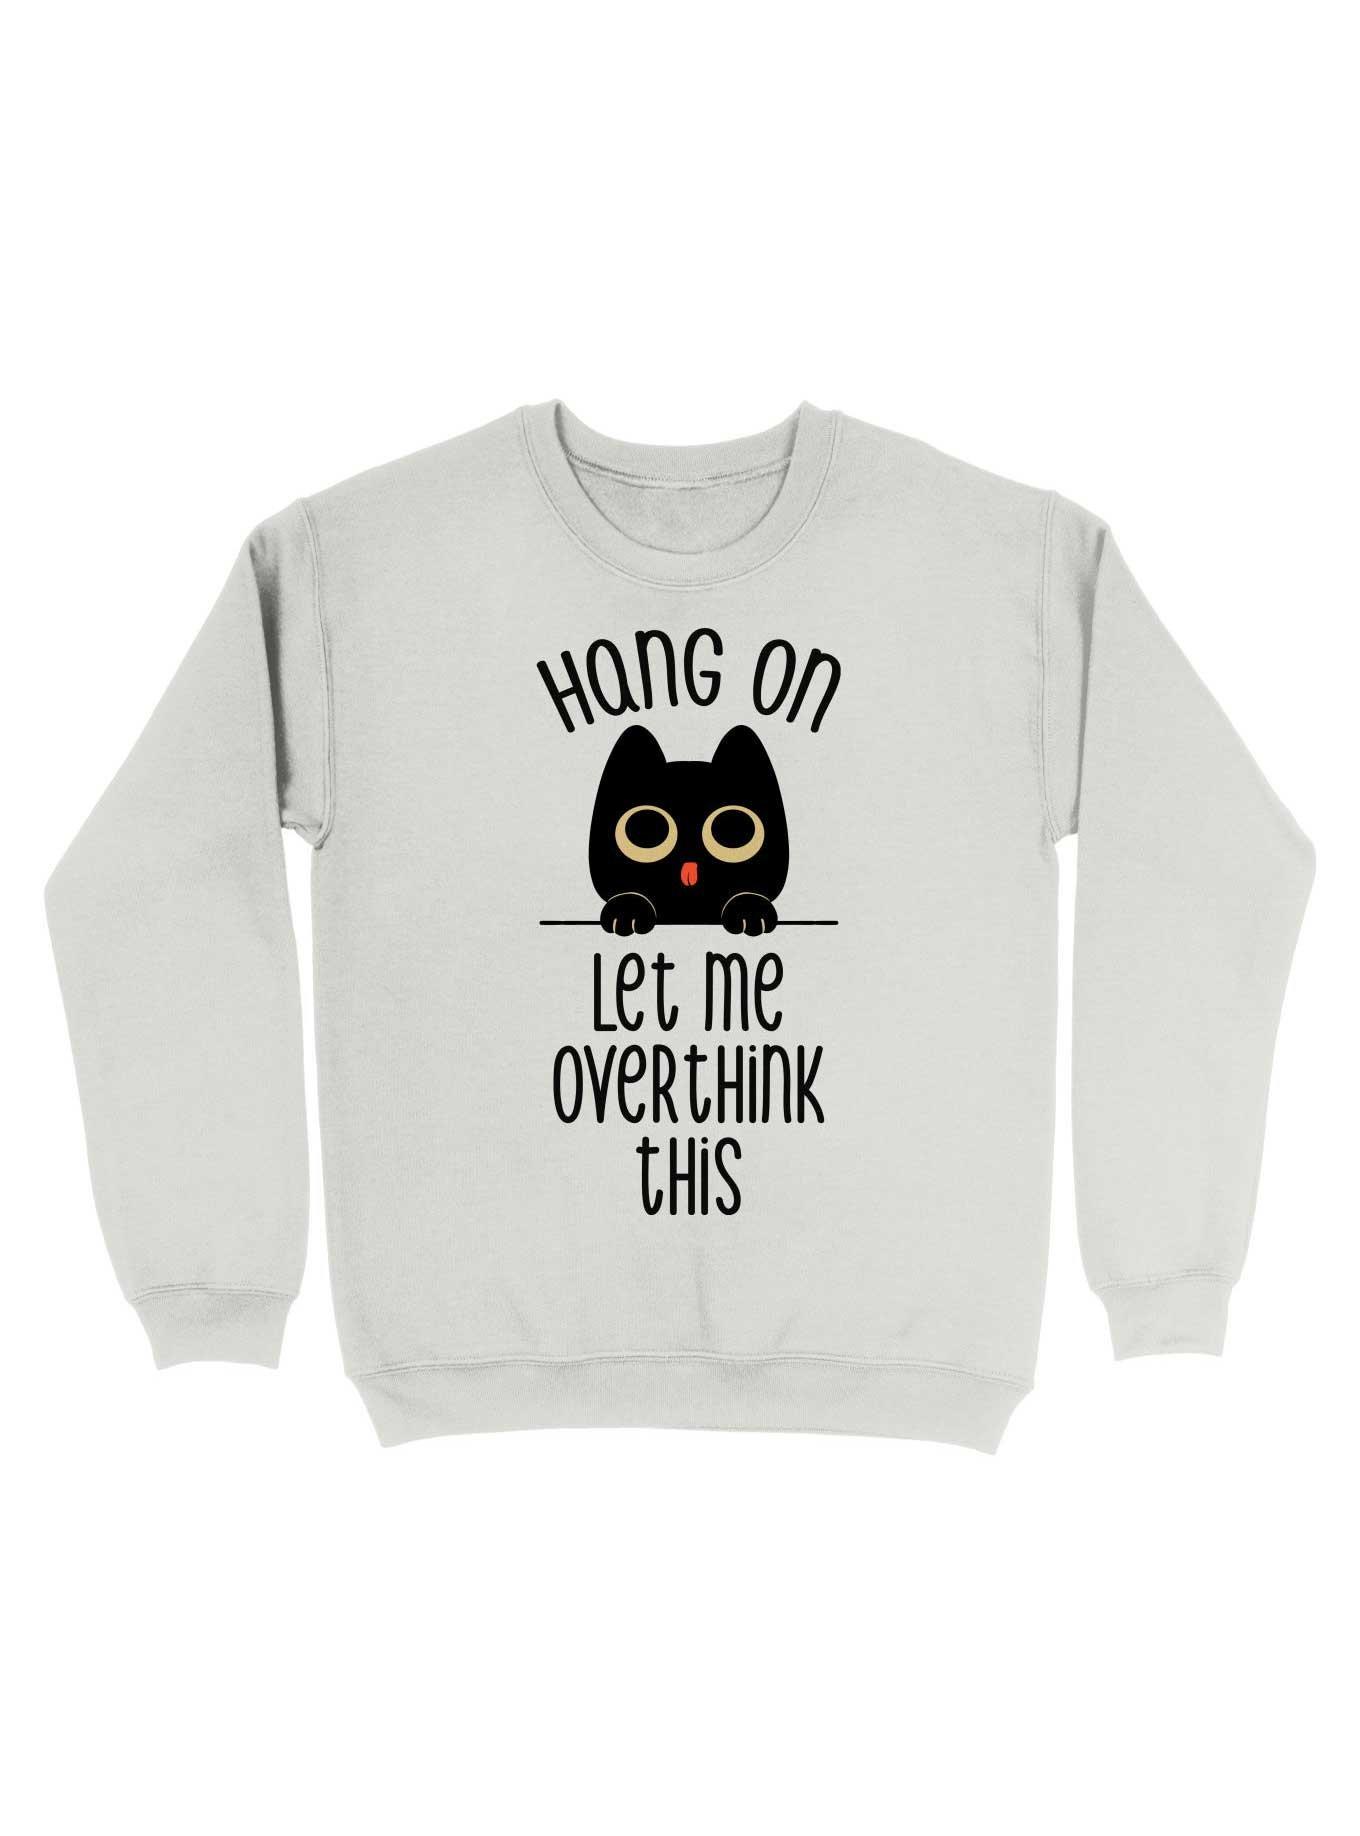 Hang On Let Me Overthink This Black Cat Sweatshirt, WHITE, hi-res